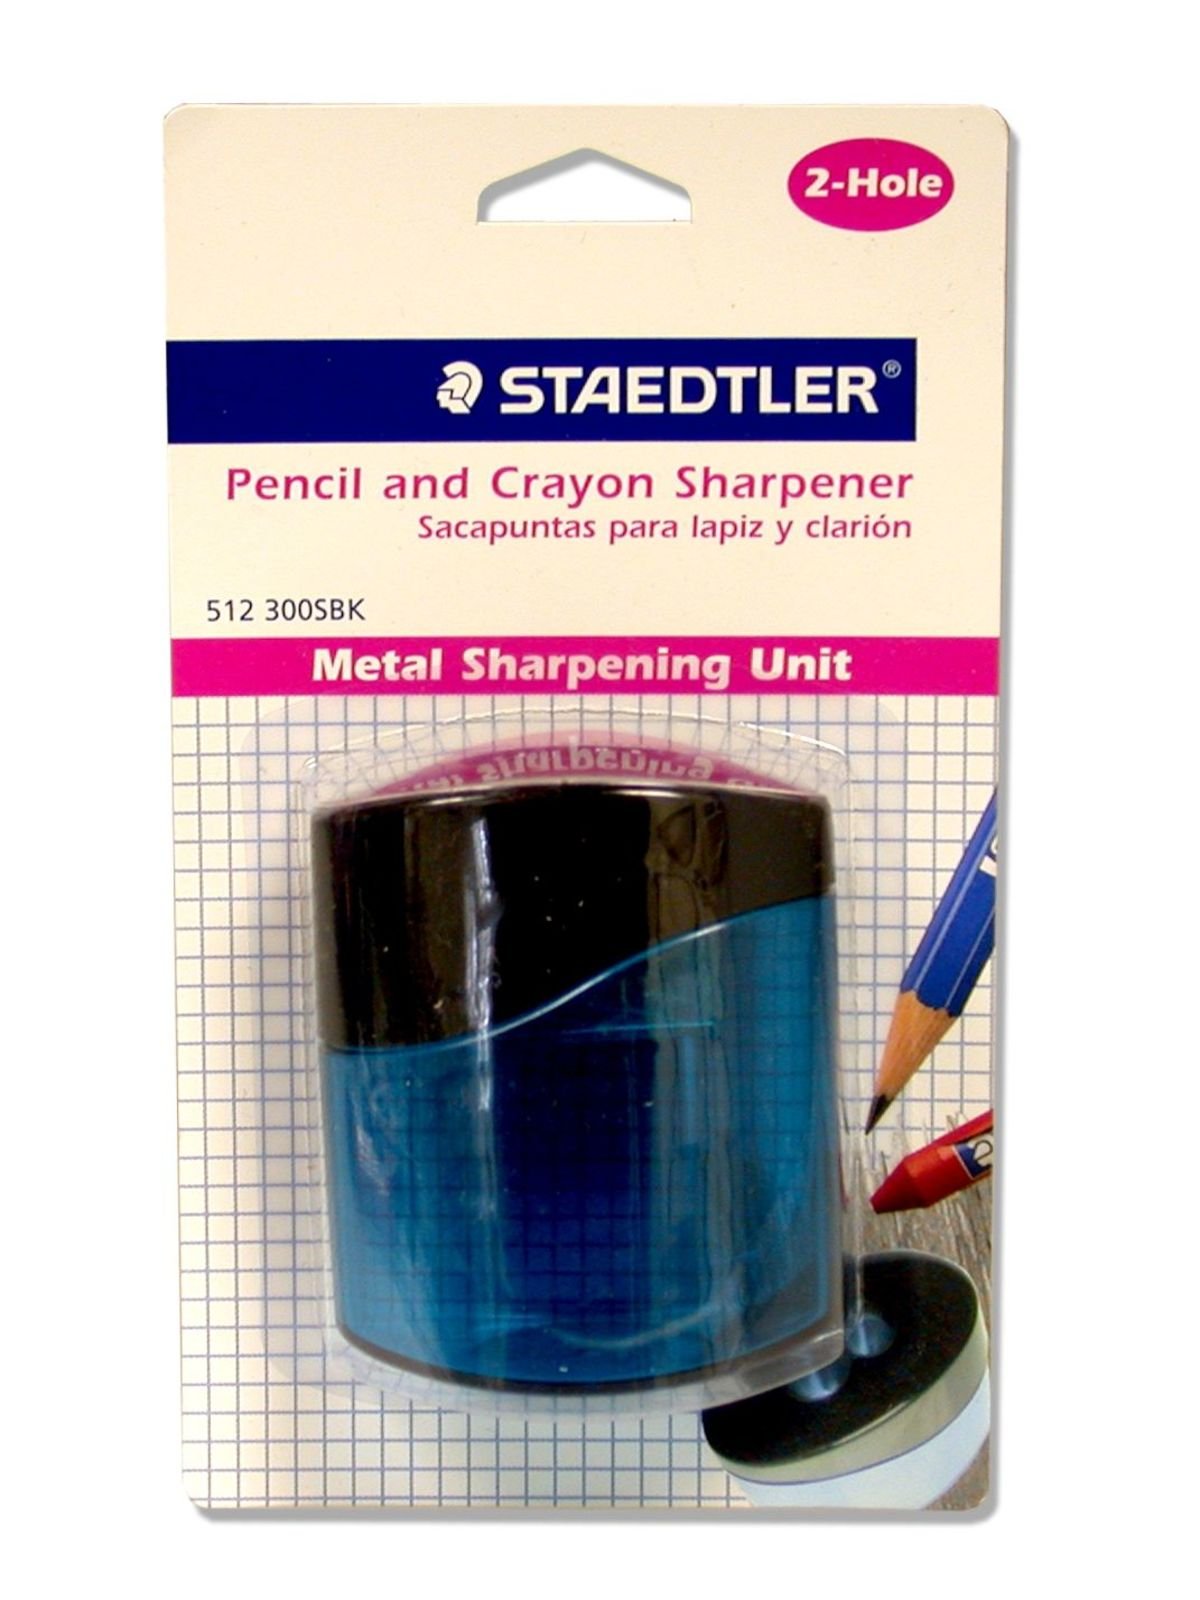 Staedtler - Pencil and Crayon Sharpener